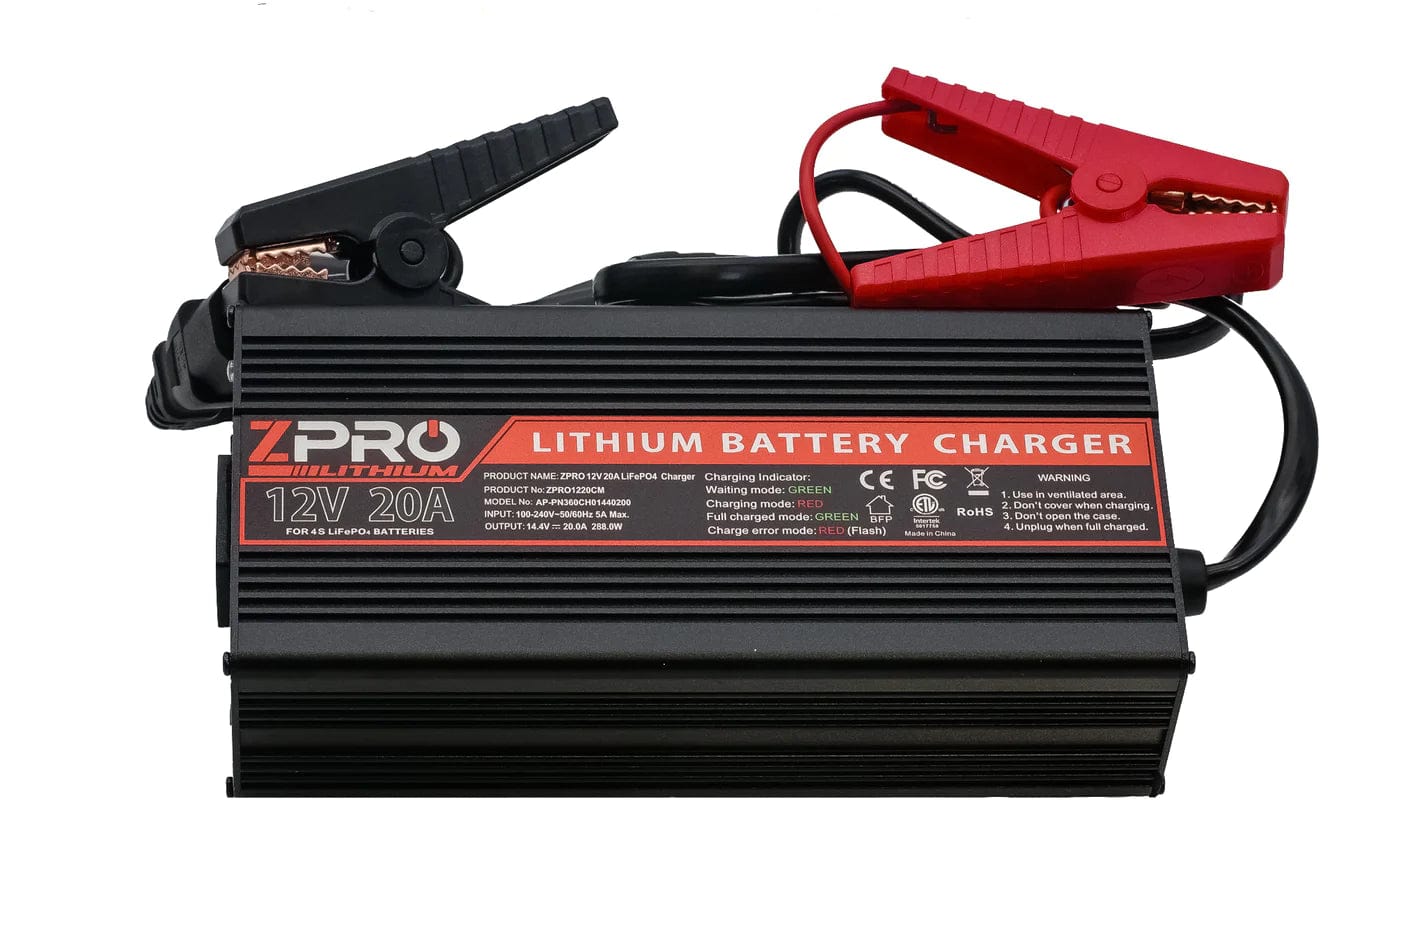 ZPro 12v 20a Lithium Battery Charger